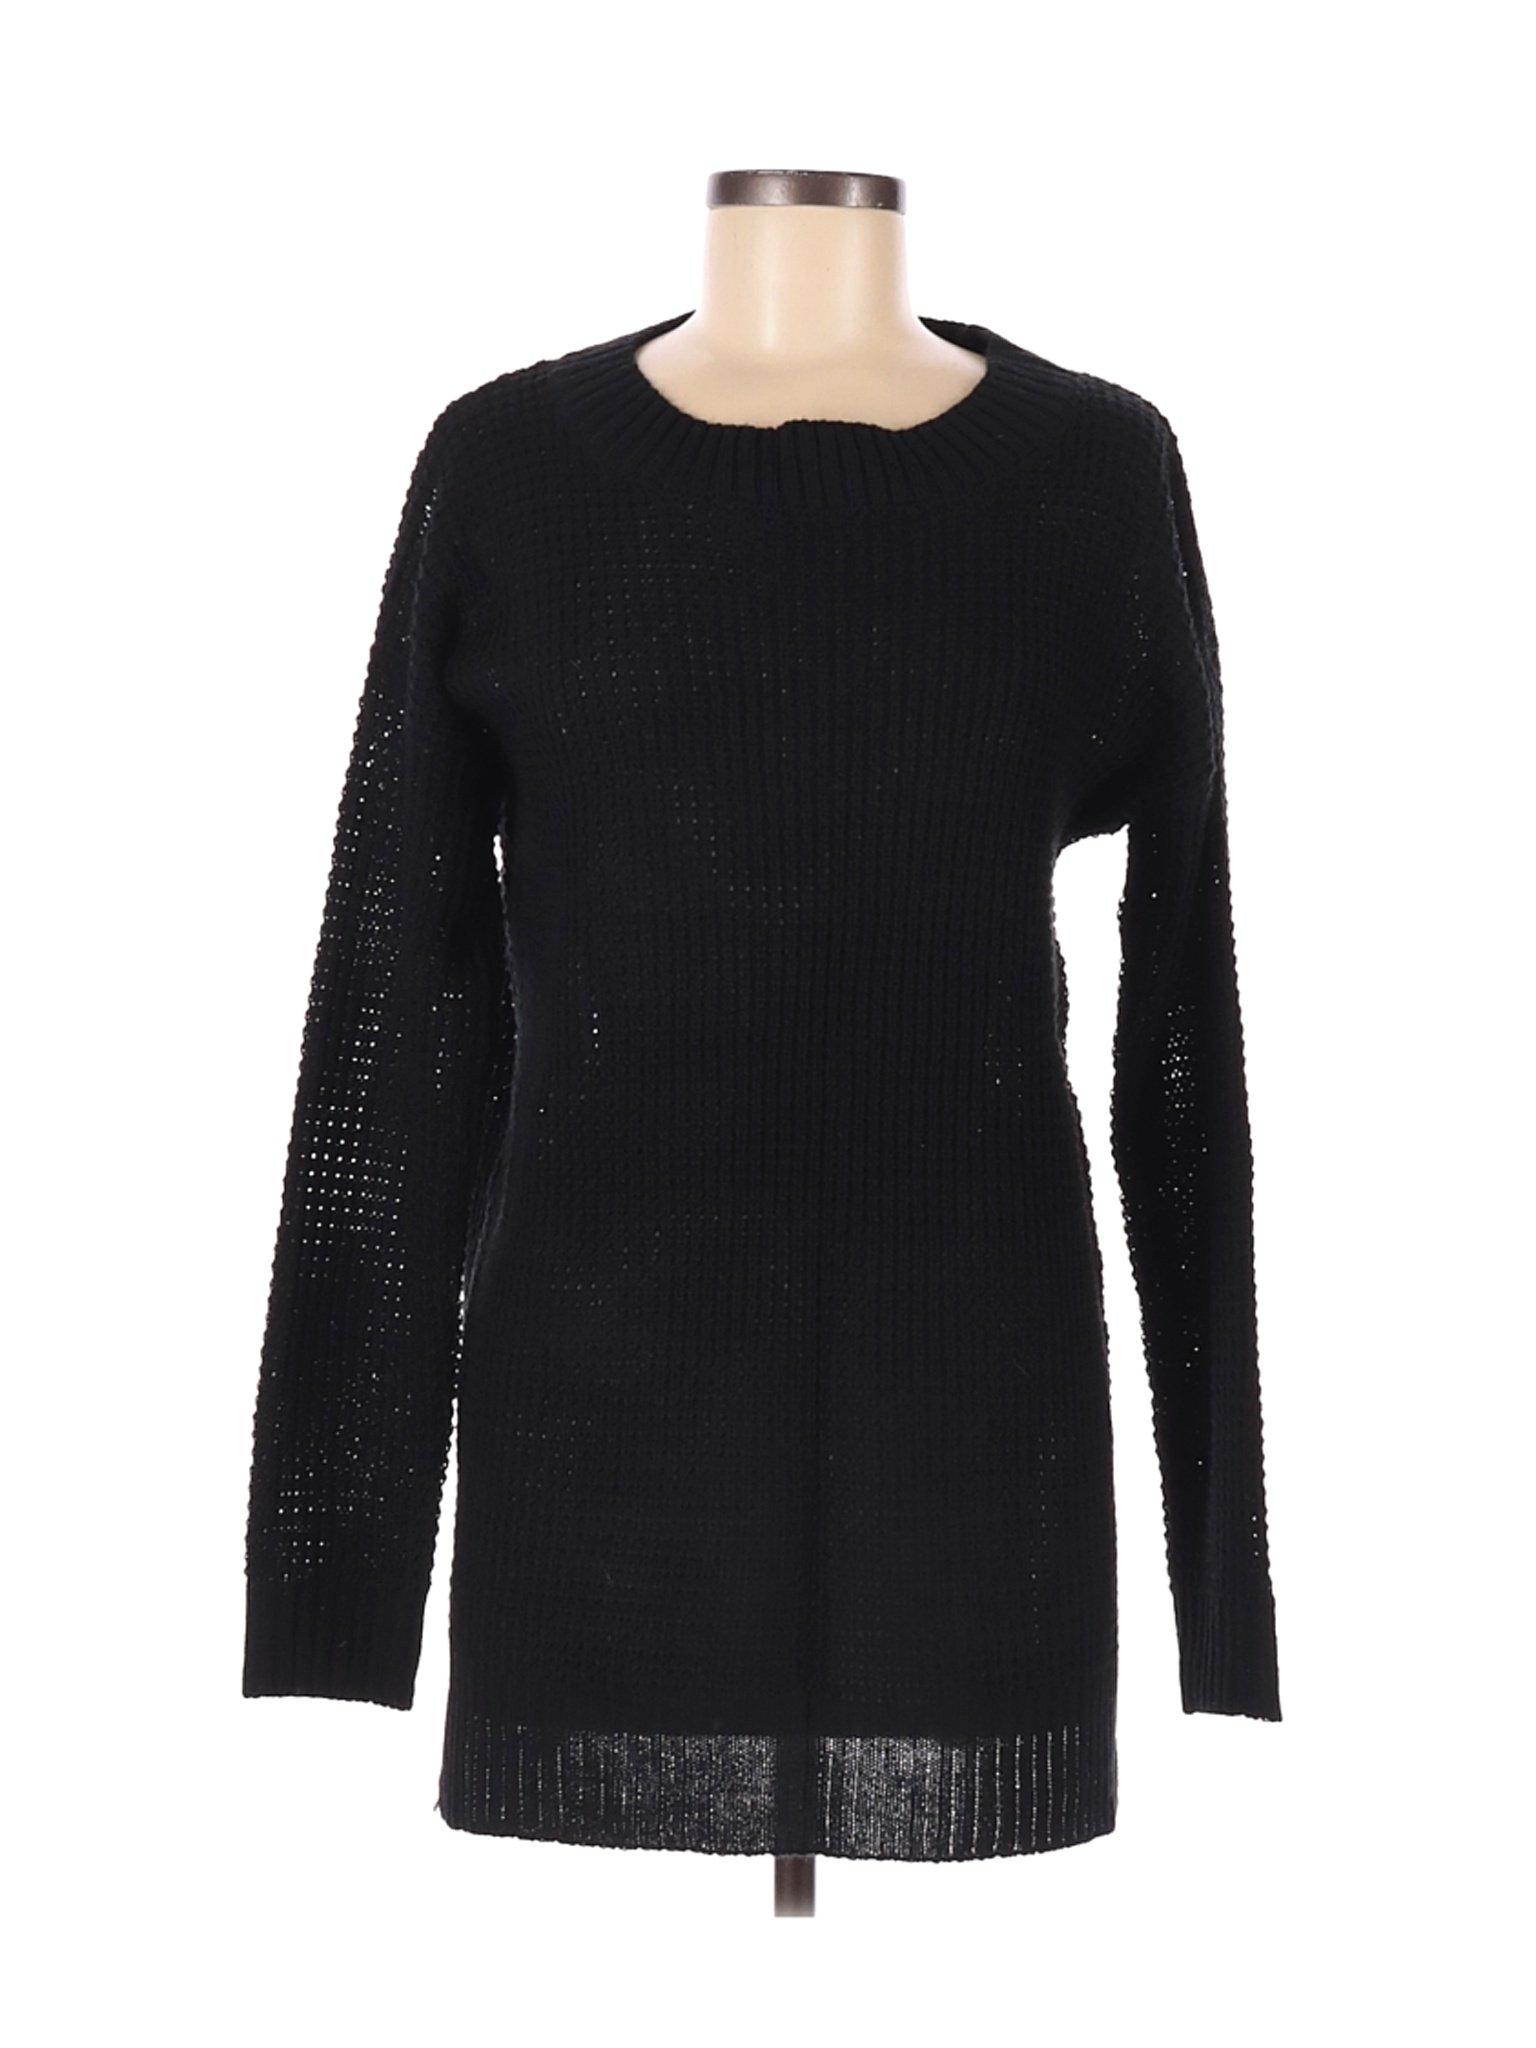 Zenana Premium Women Black Pullover Sweater M | eBay